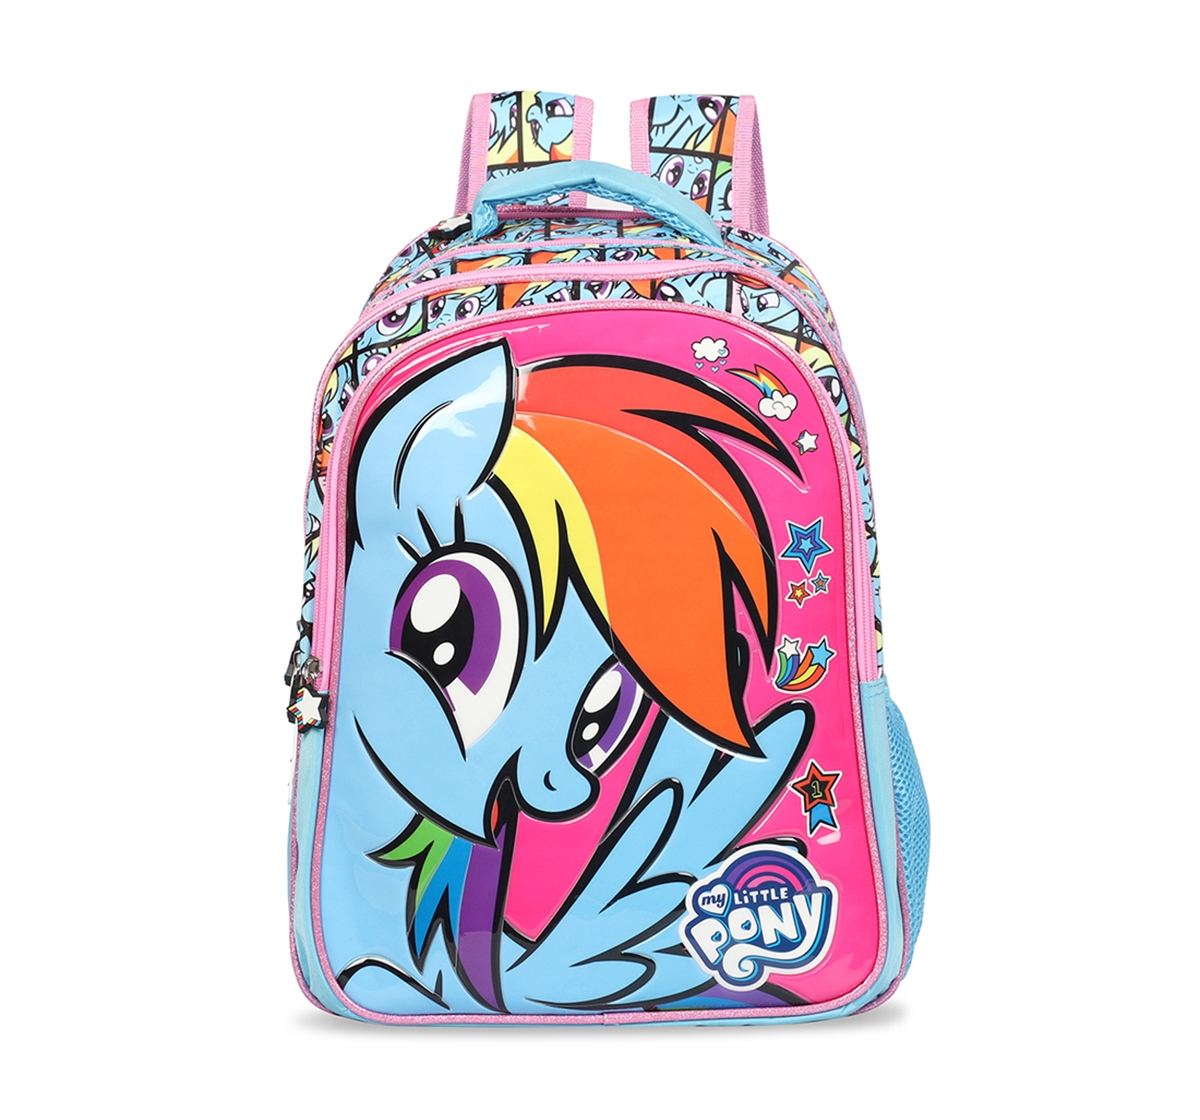 My Little Pony | My Little Pony My Little Pony Hood School Bag 41 Cm Bags for Girls age 7Y+  0